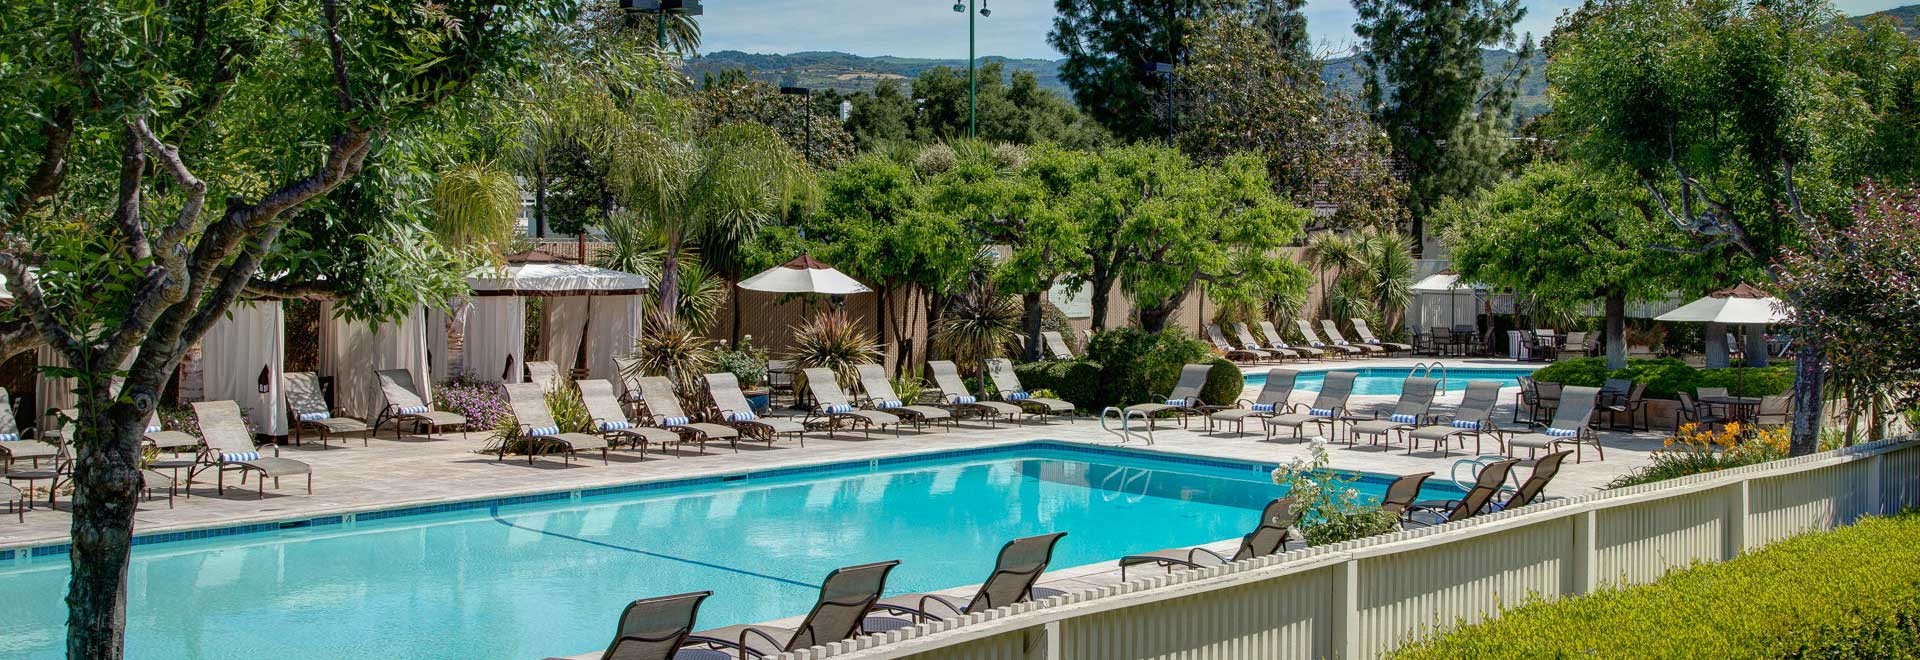 Silverado Resort and Spa, California - Book. Travel. Play.